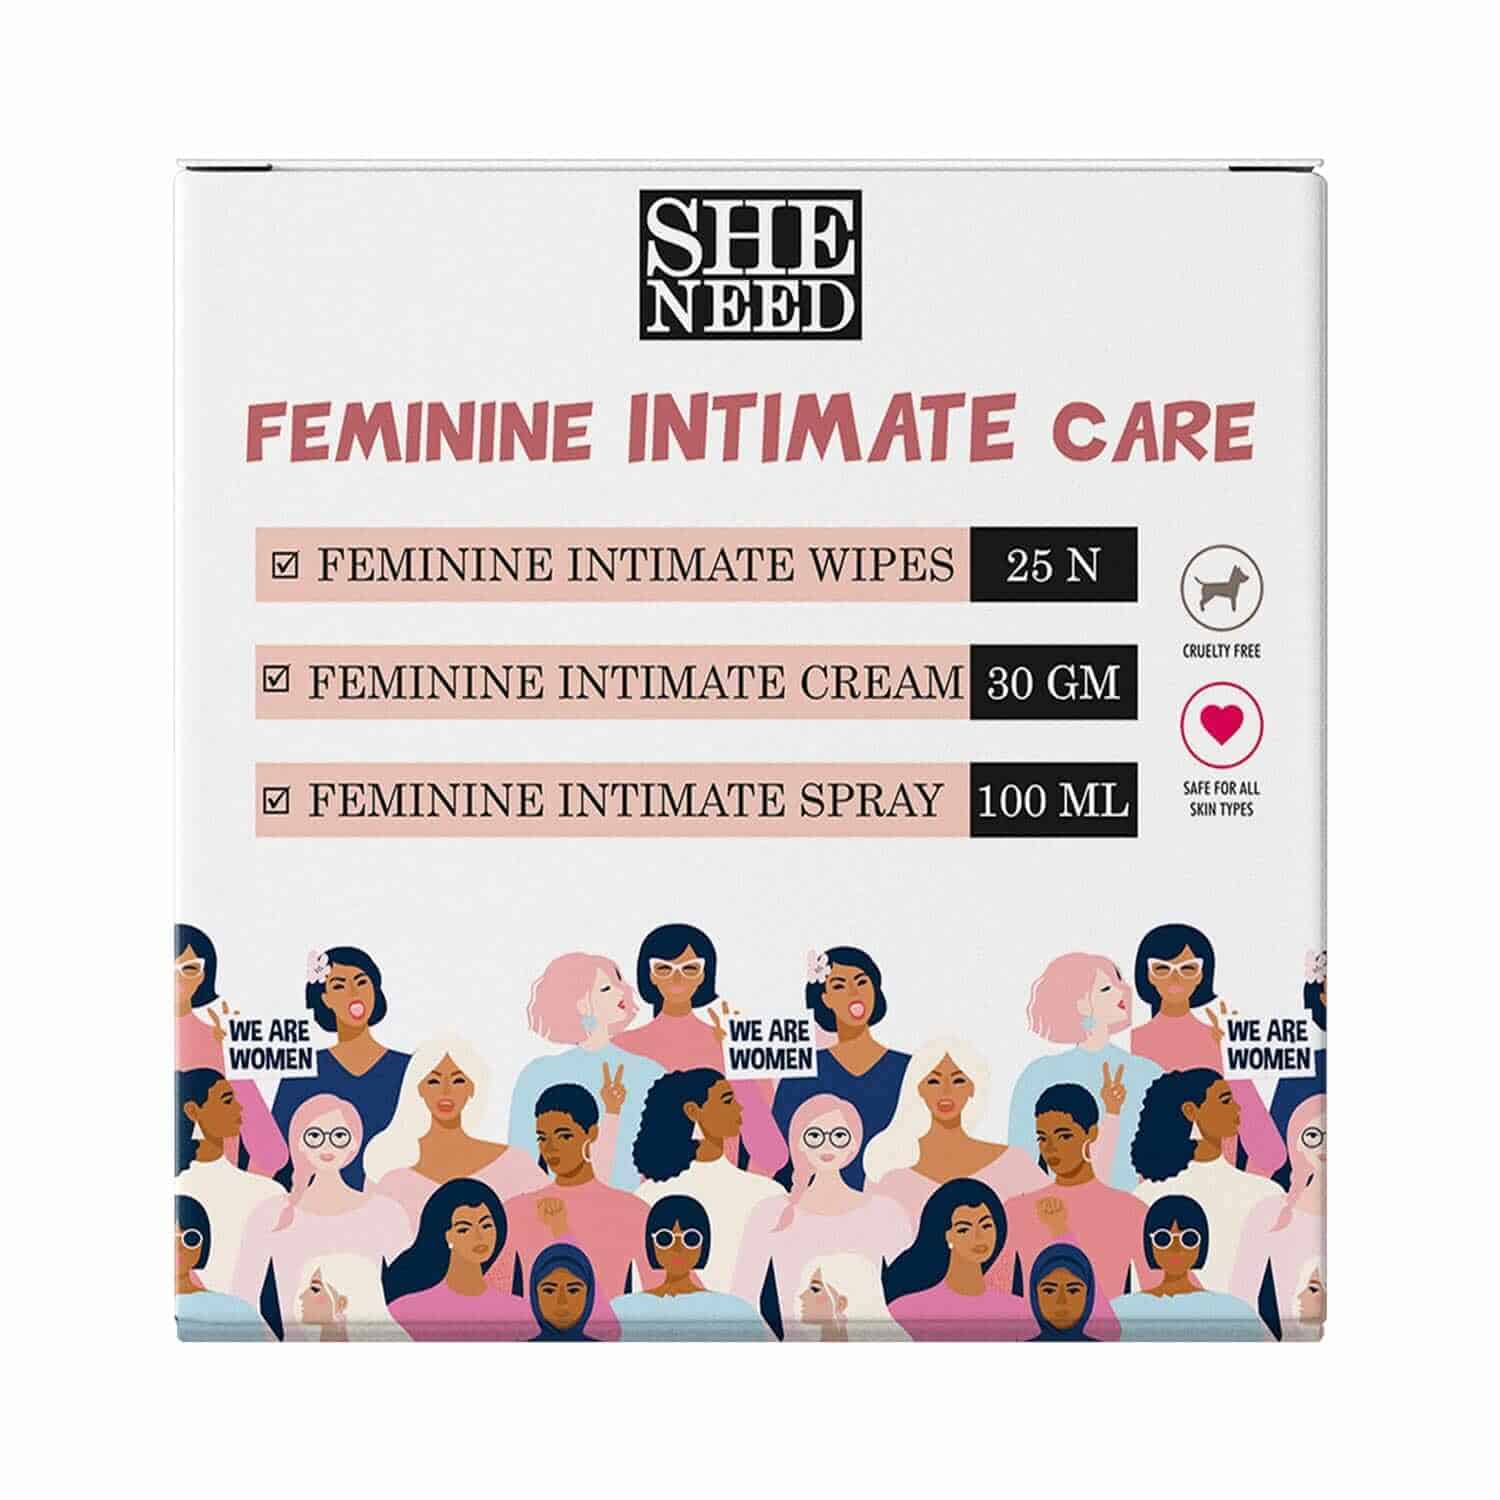 SheNeed Feminine Intimate Care Kit